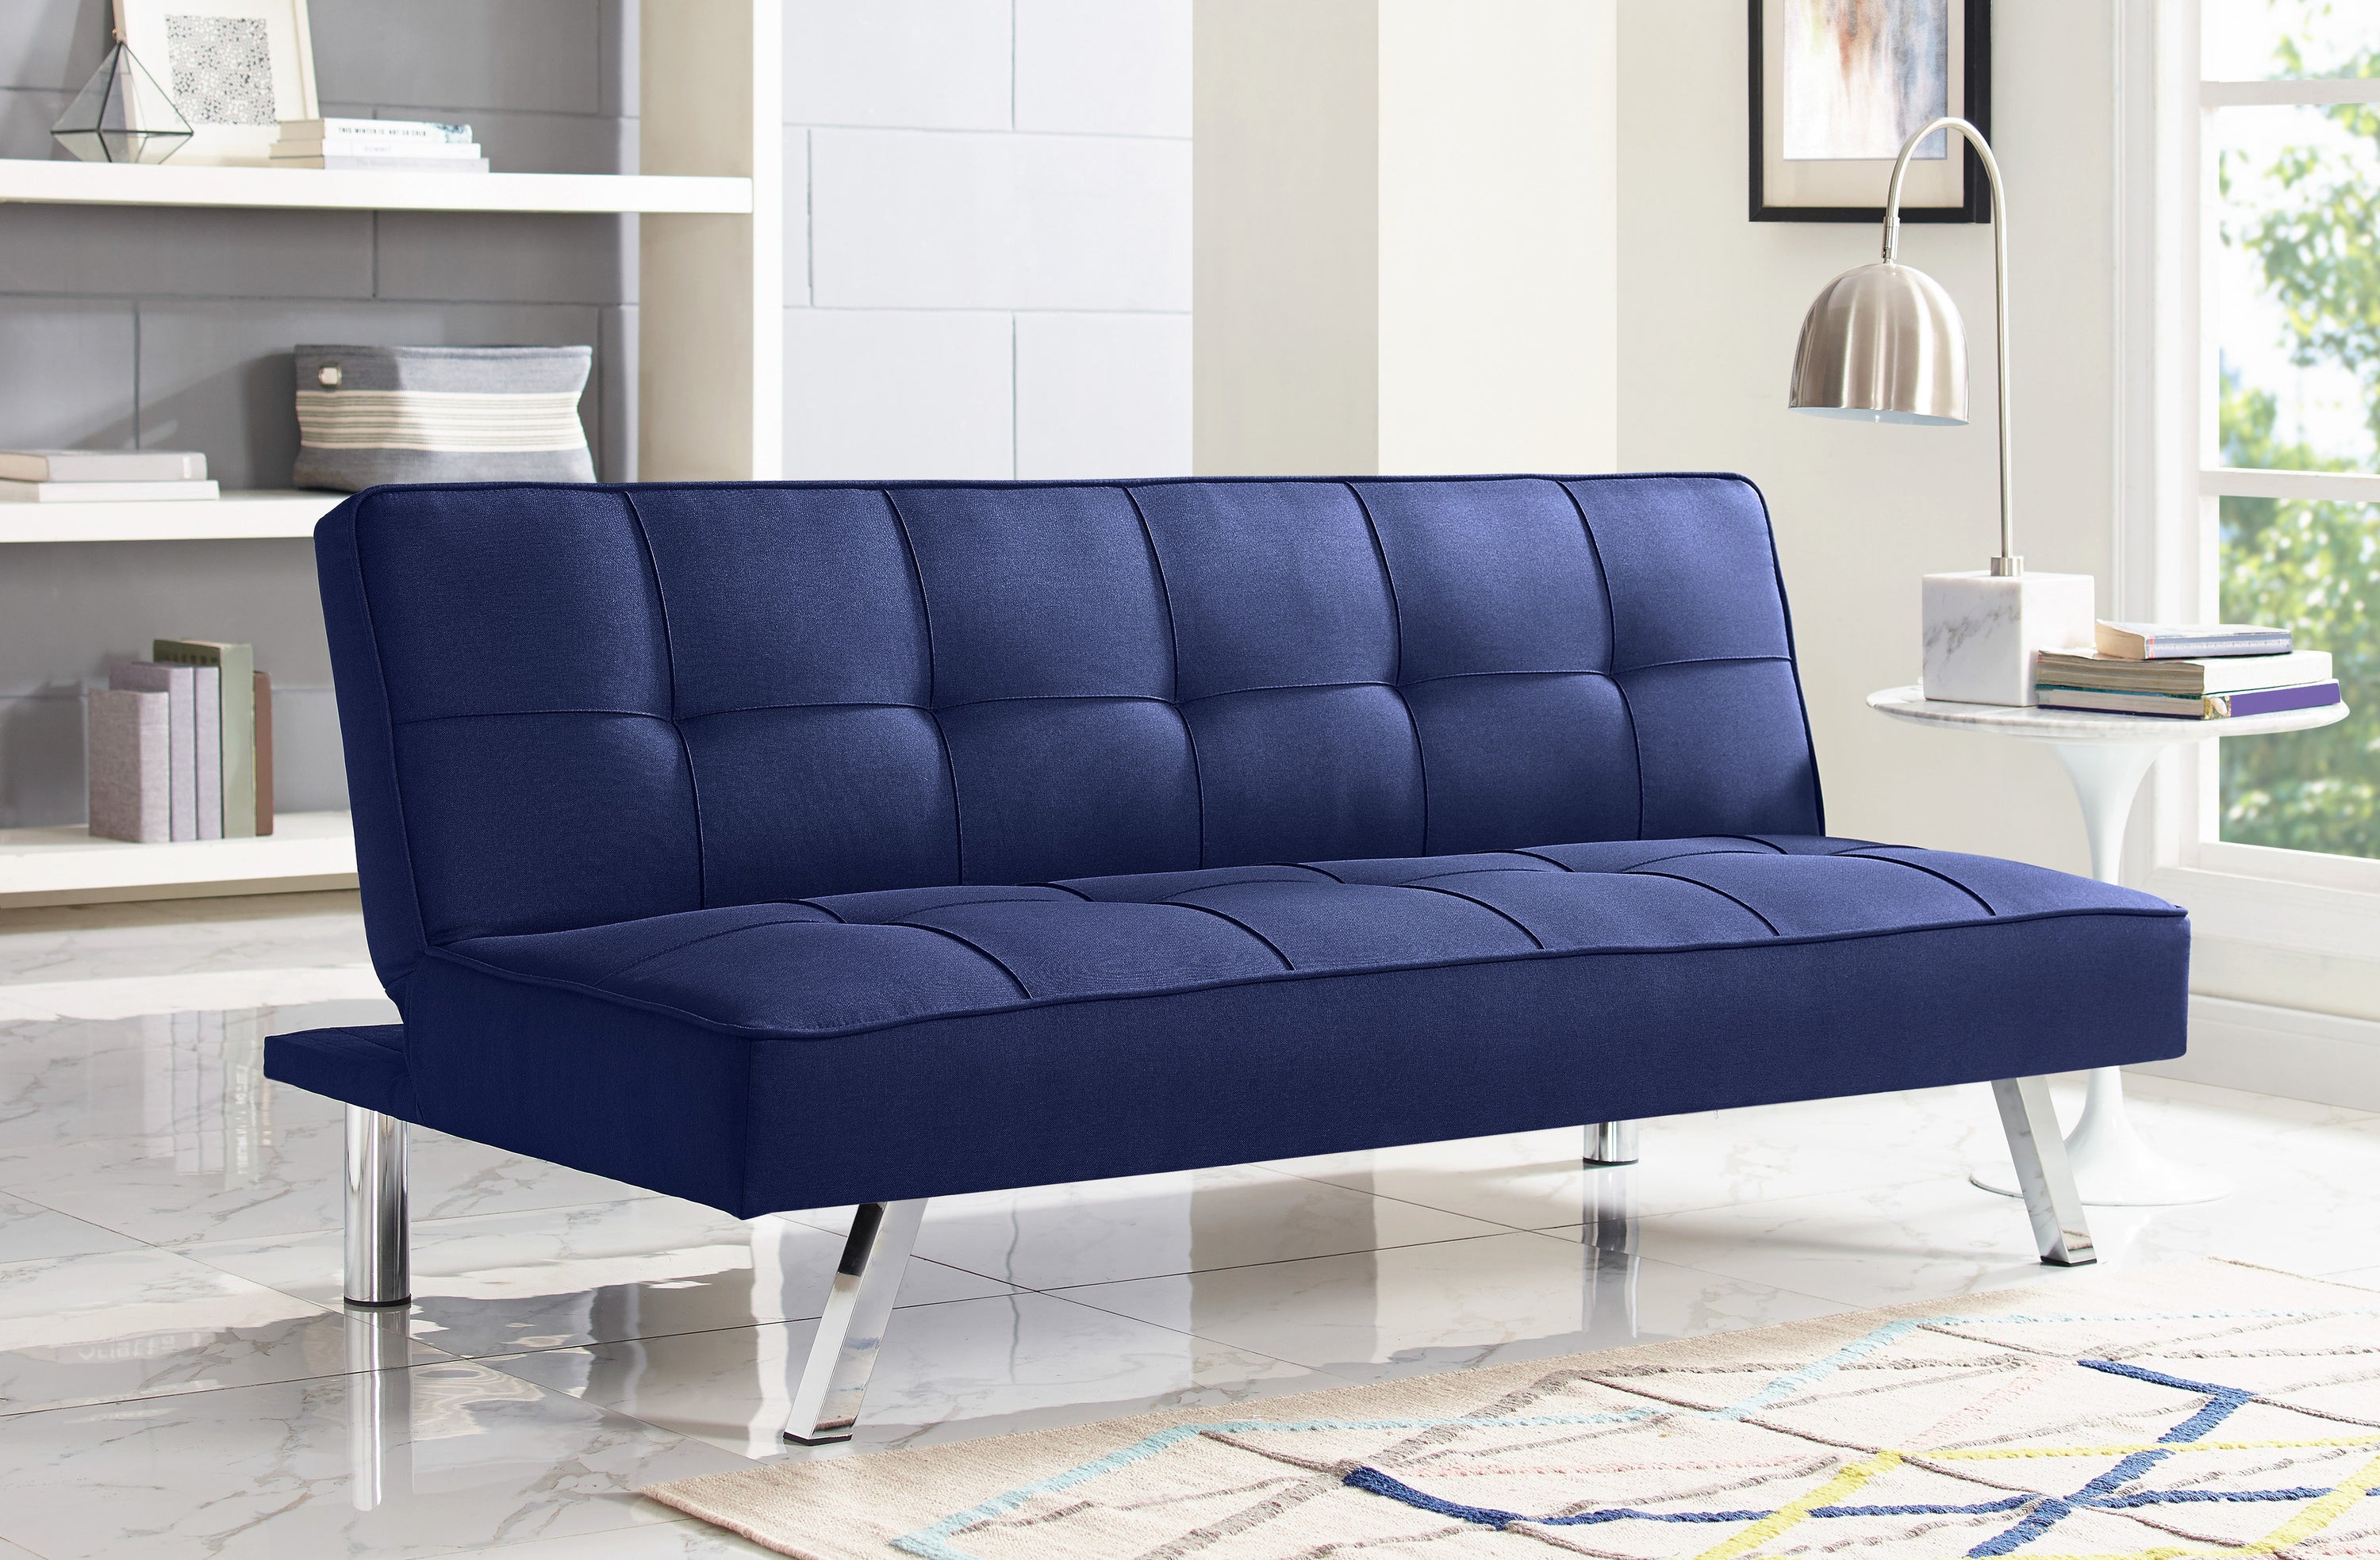 The blue sofa 